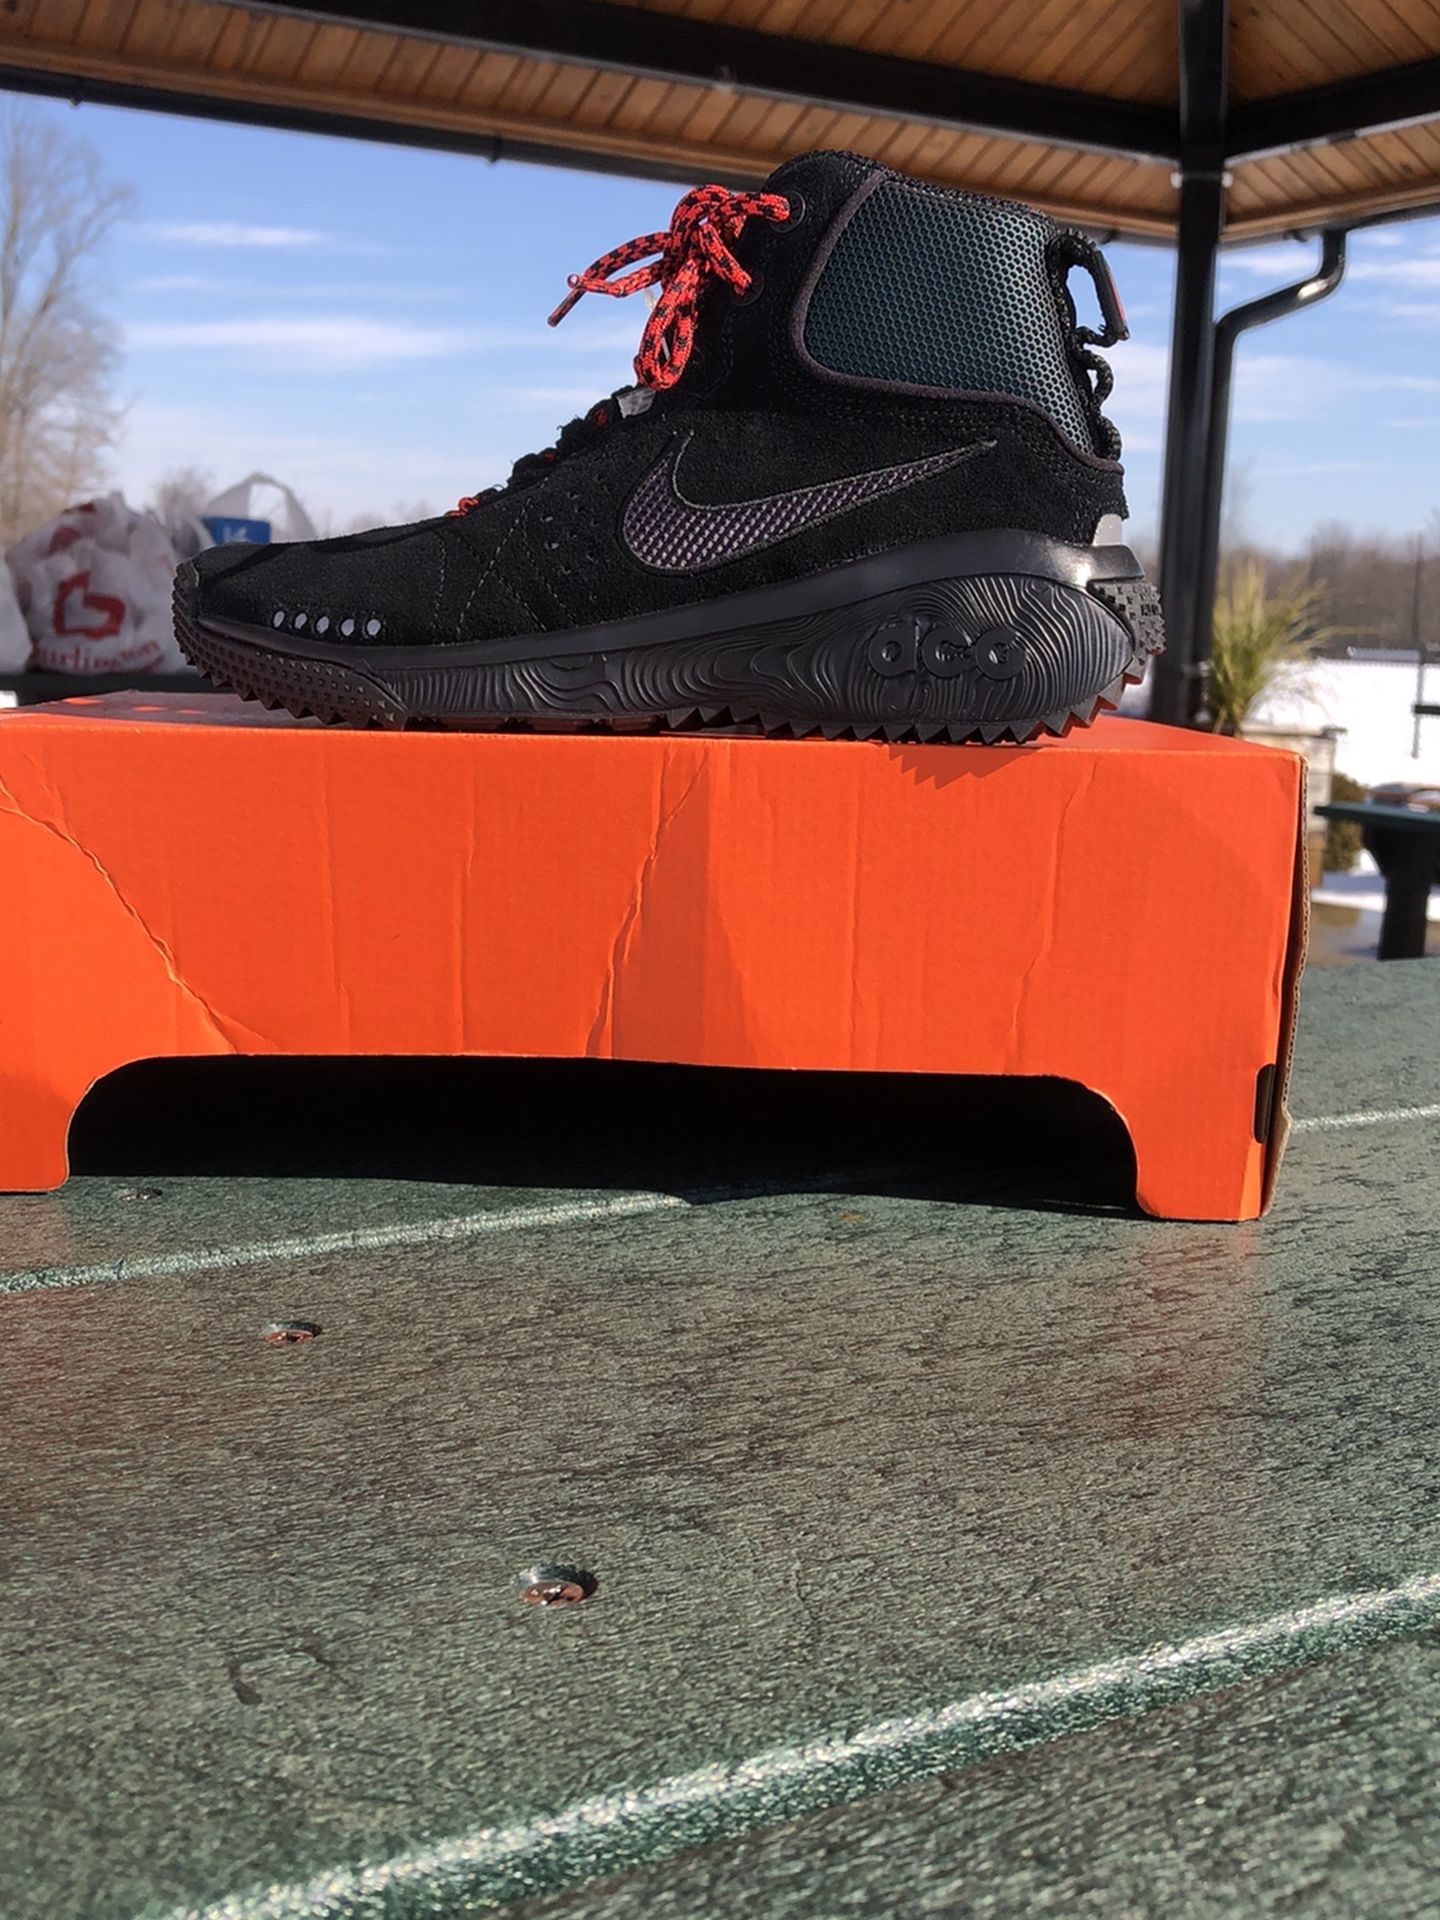 Nike ACG Angels Rest (Mens5 Womans6.5)AQ0917 001 Black Hiking Boots